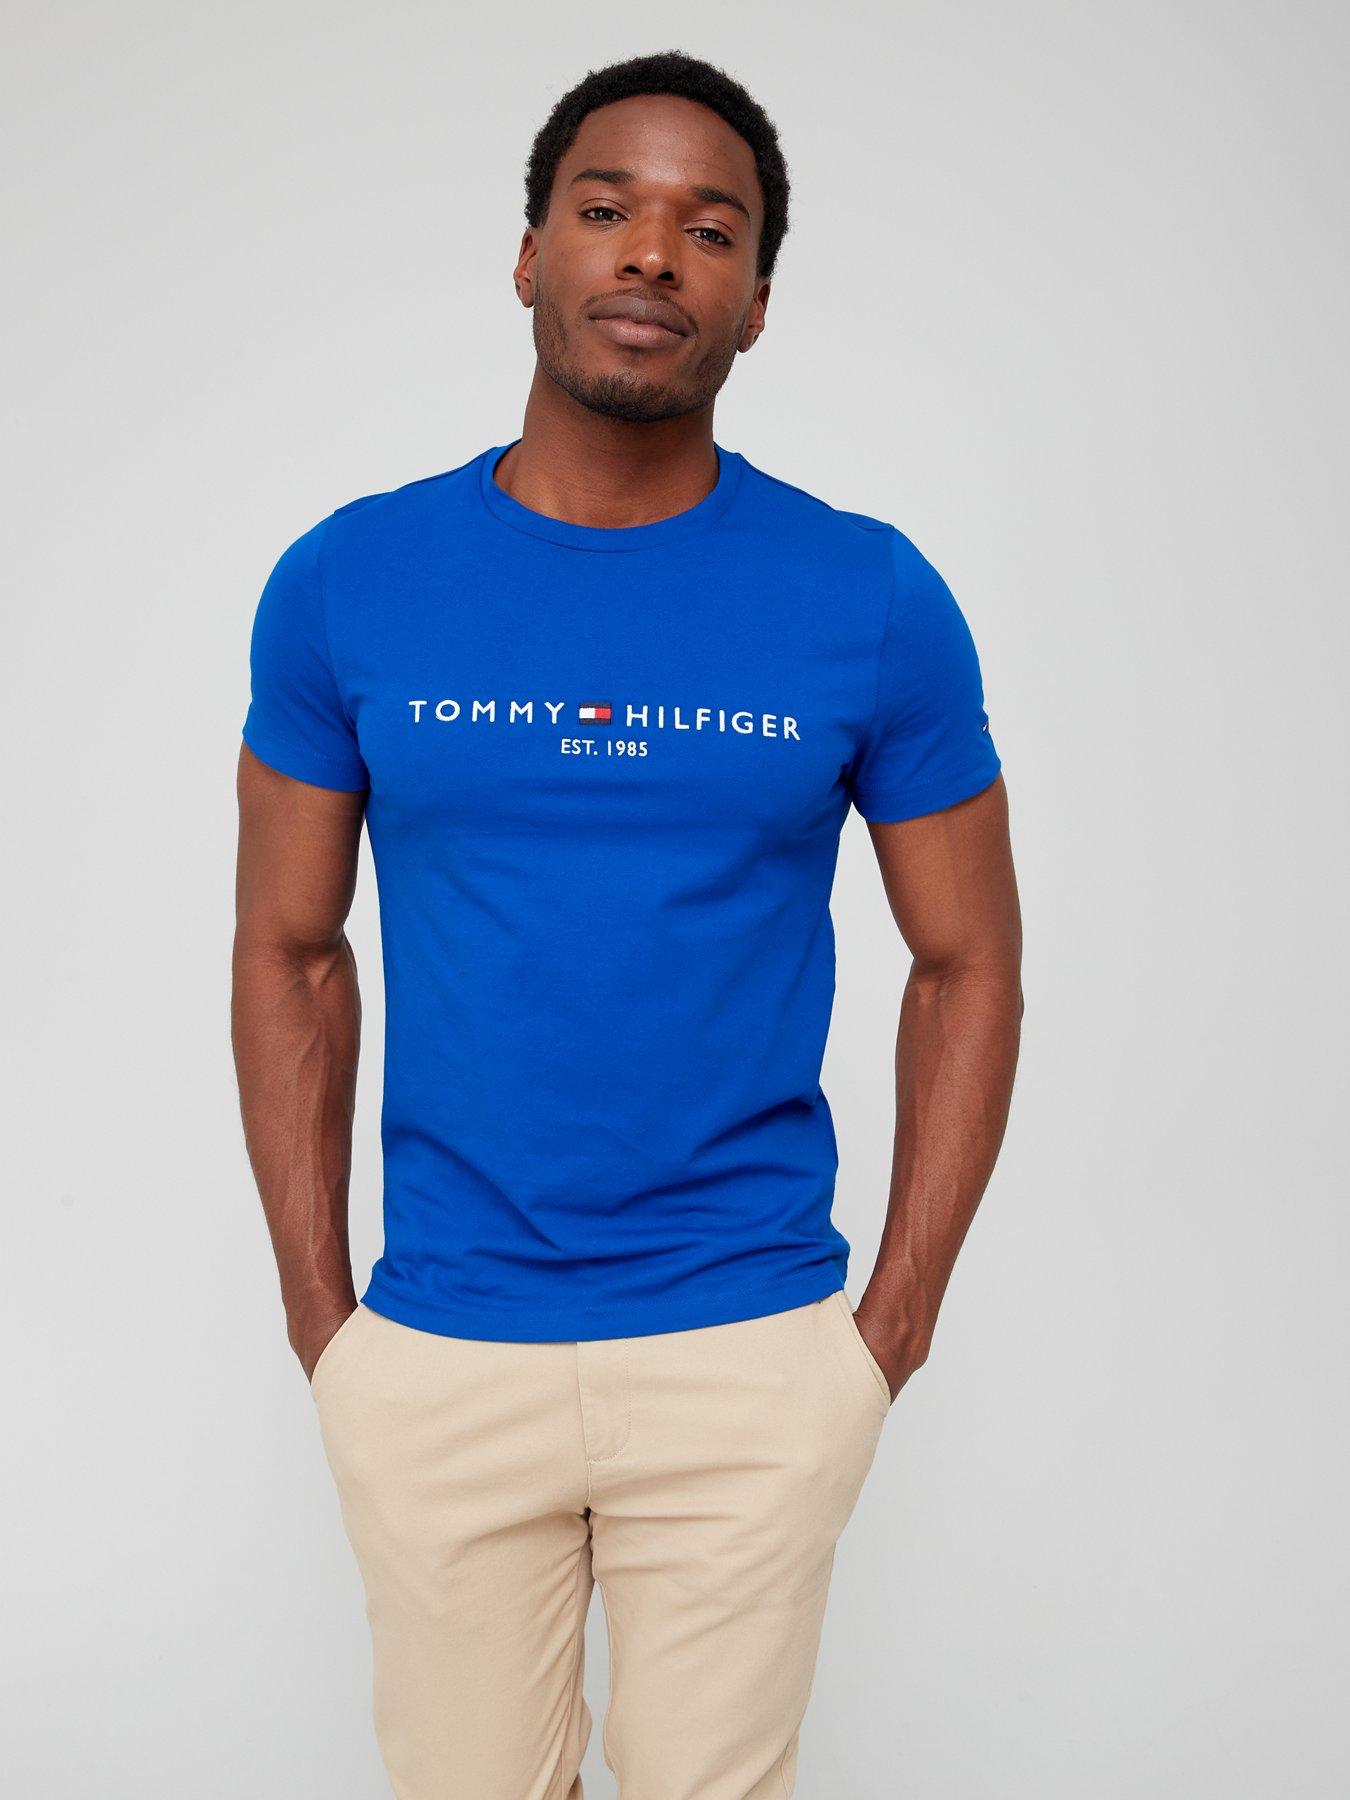 | T-shirts T-Shirts Men | Tommy hilfiger | & polos